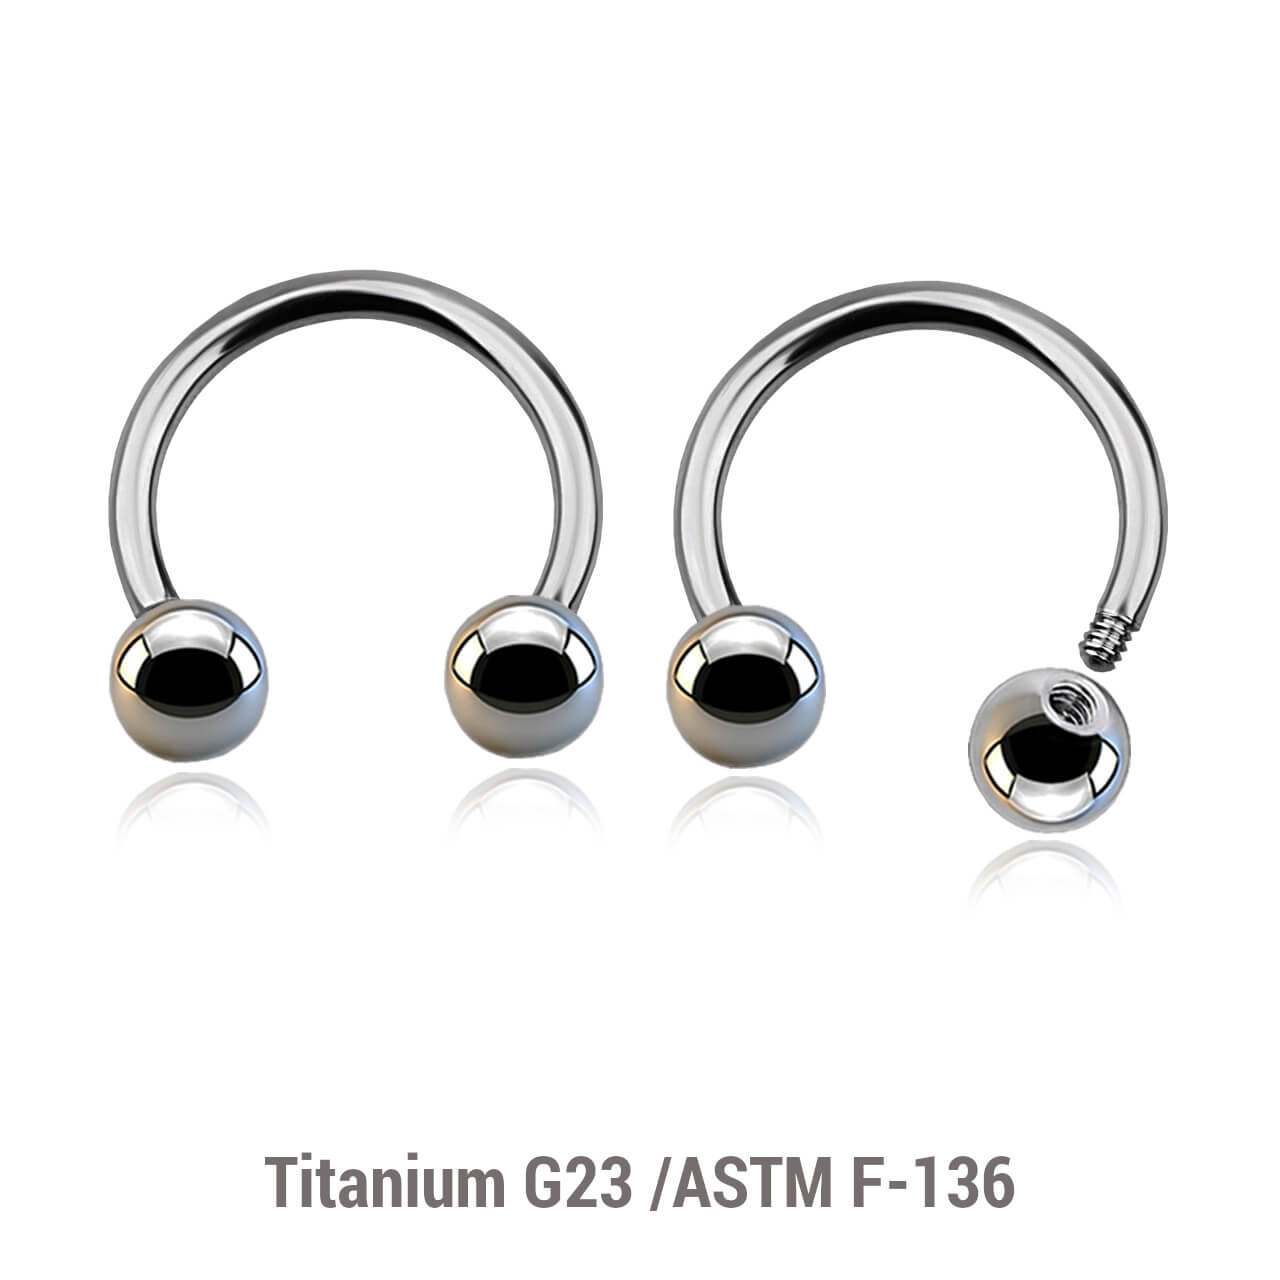 TCB12B4 Wholesale Pack of 10 high polished titanium G23 horseshoe circular barbells, Thickness 1.2mm, Ball size 4mm